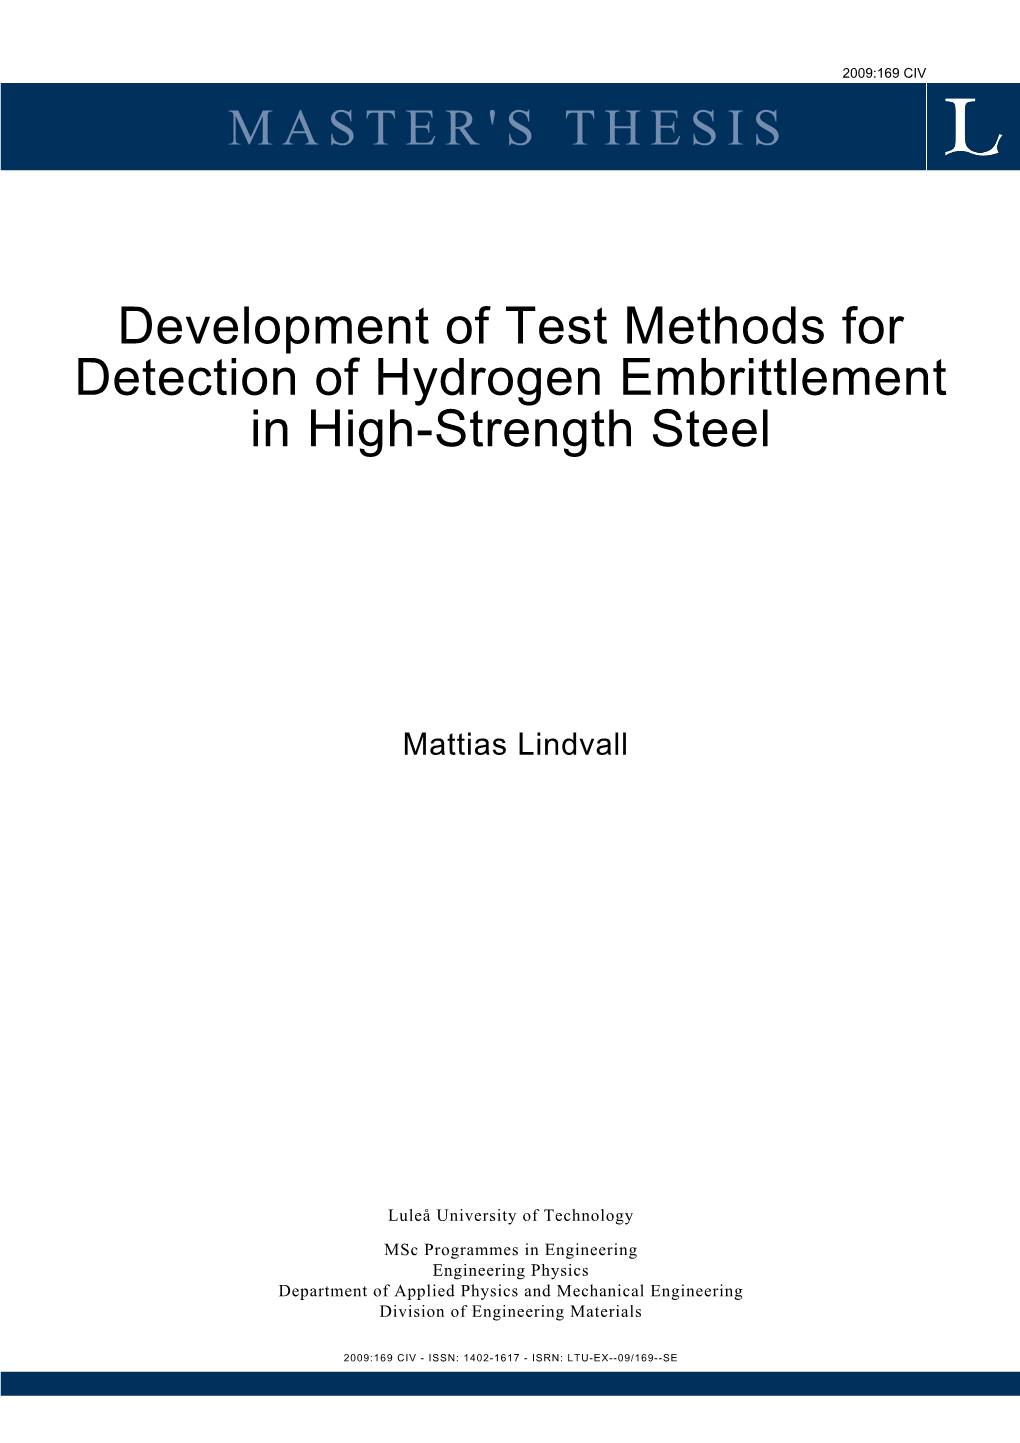 Development of Test Methods for Detection of Hydrogen Embrittlement in High-Strength Steel